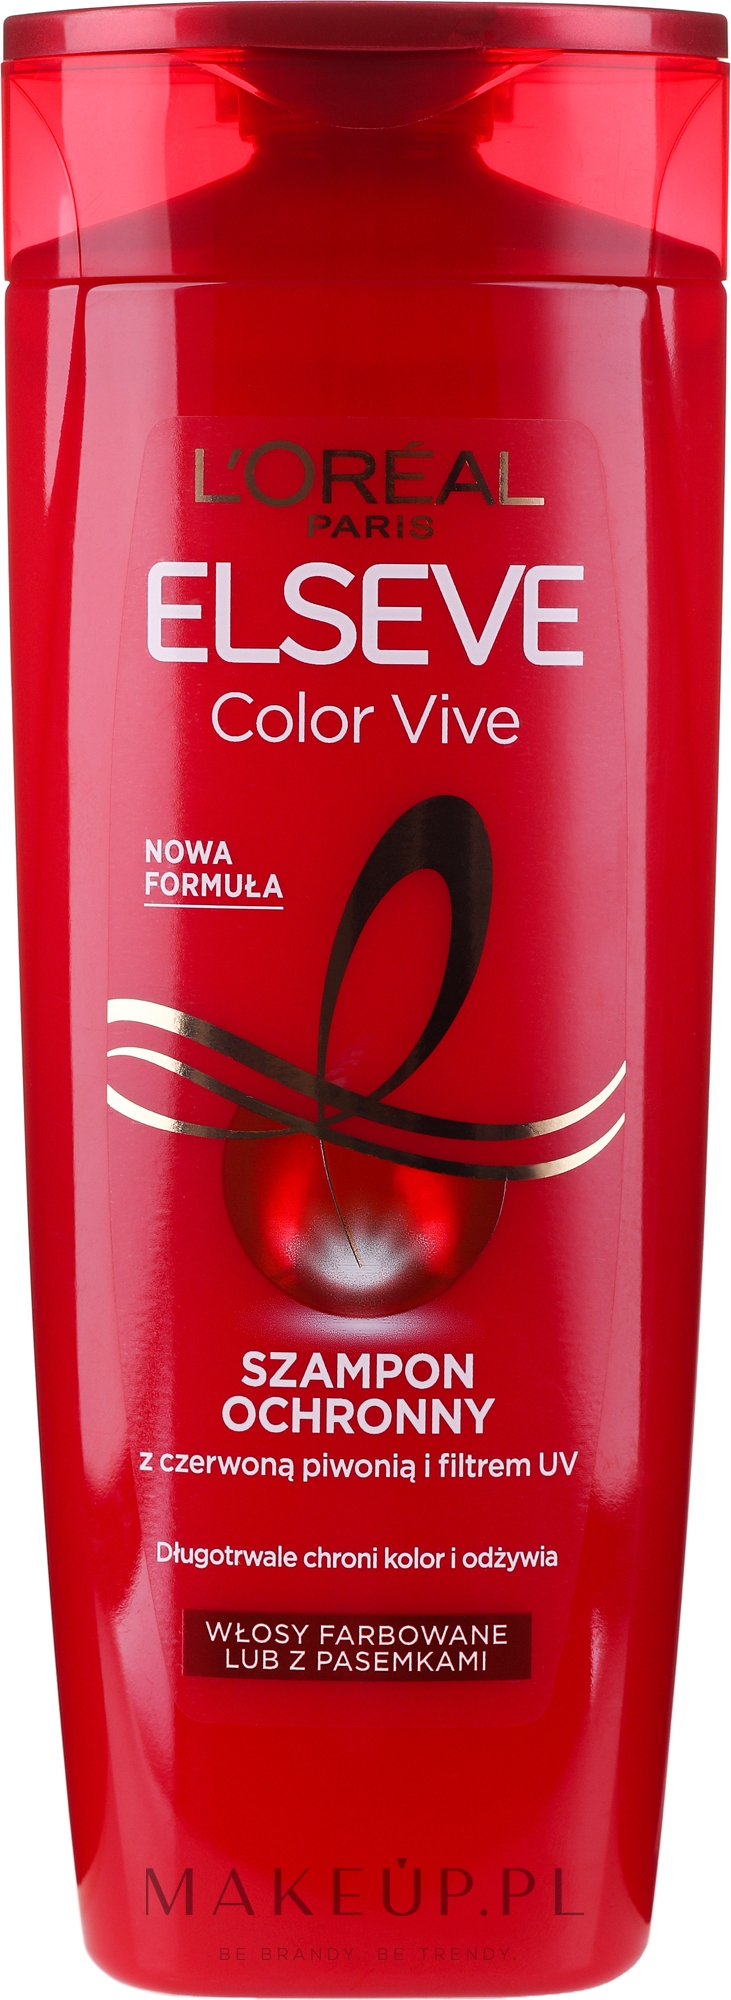 elseve szampon czerwony